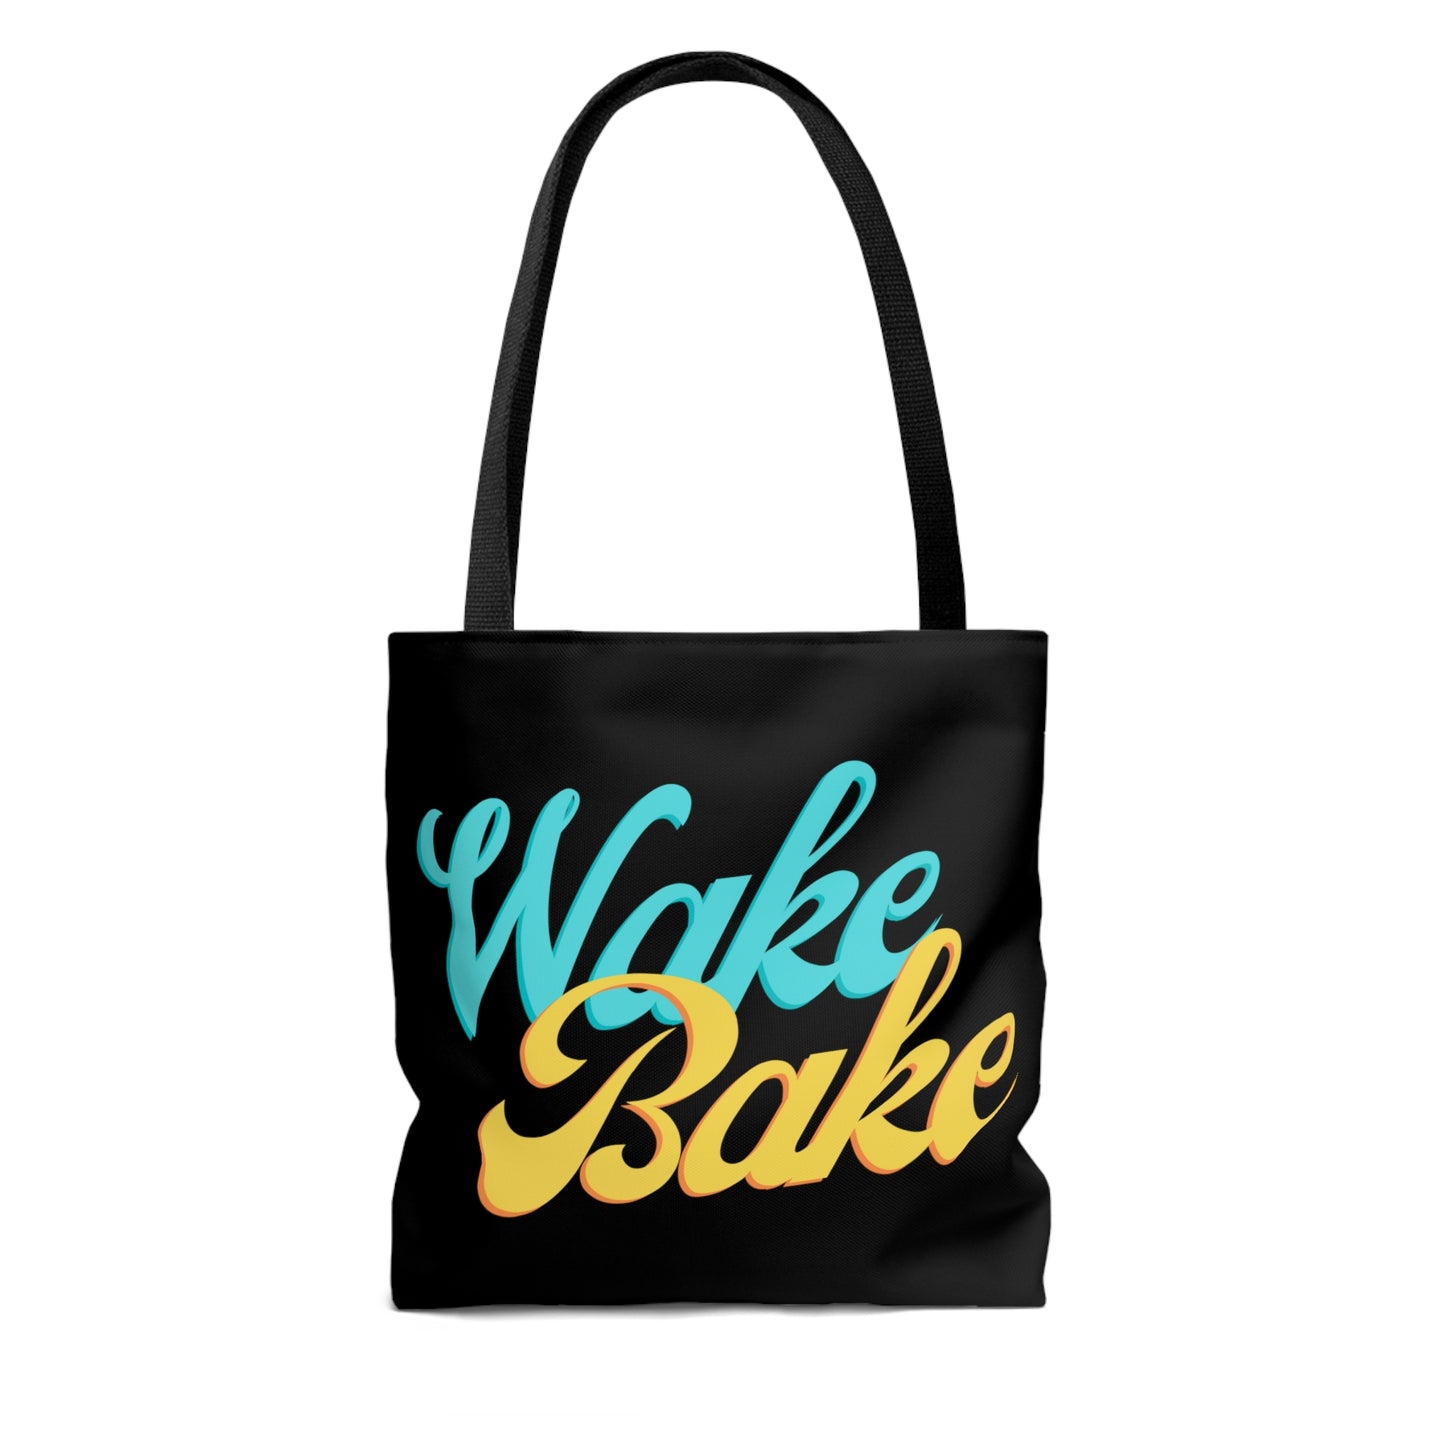 a black wake and bake tote bag